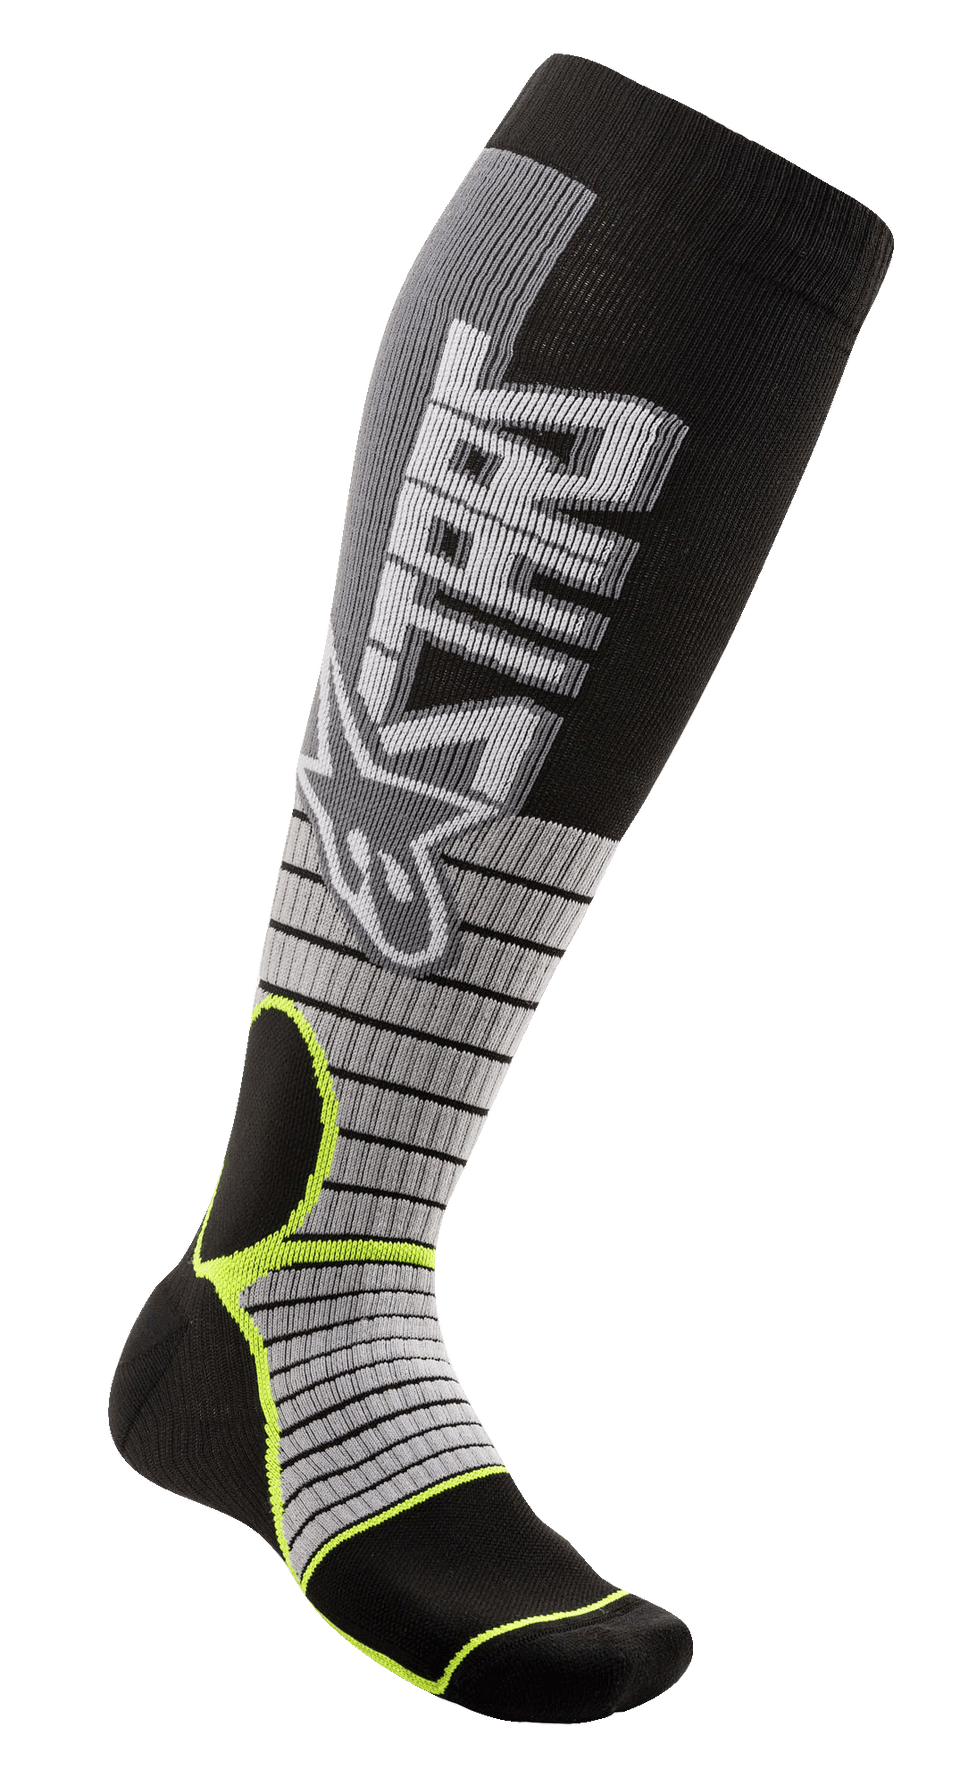 MX Pro Socks